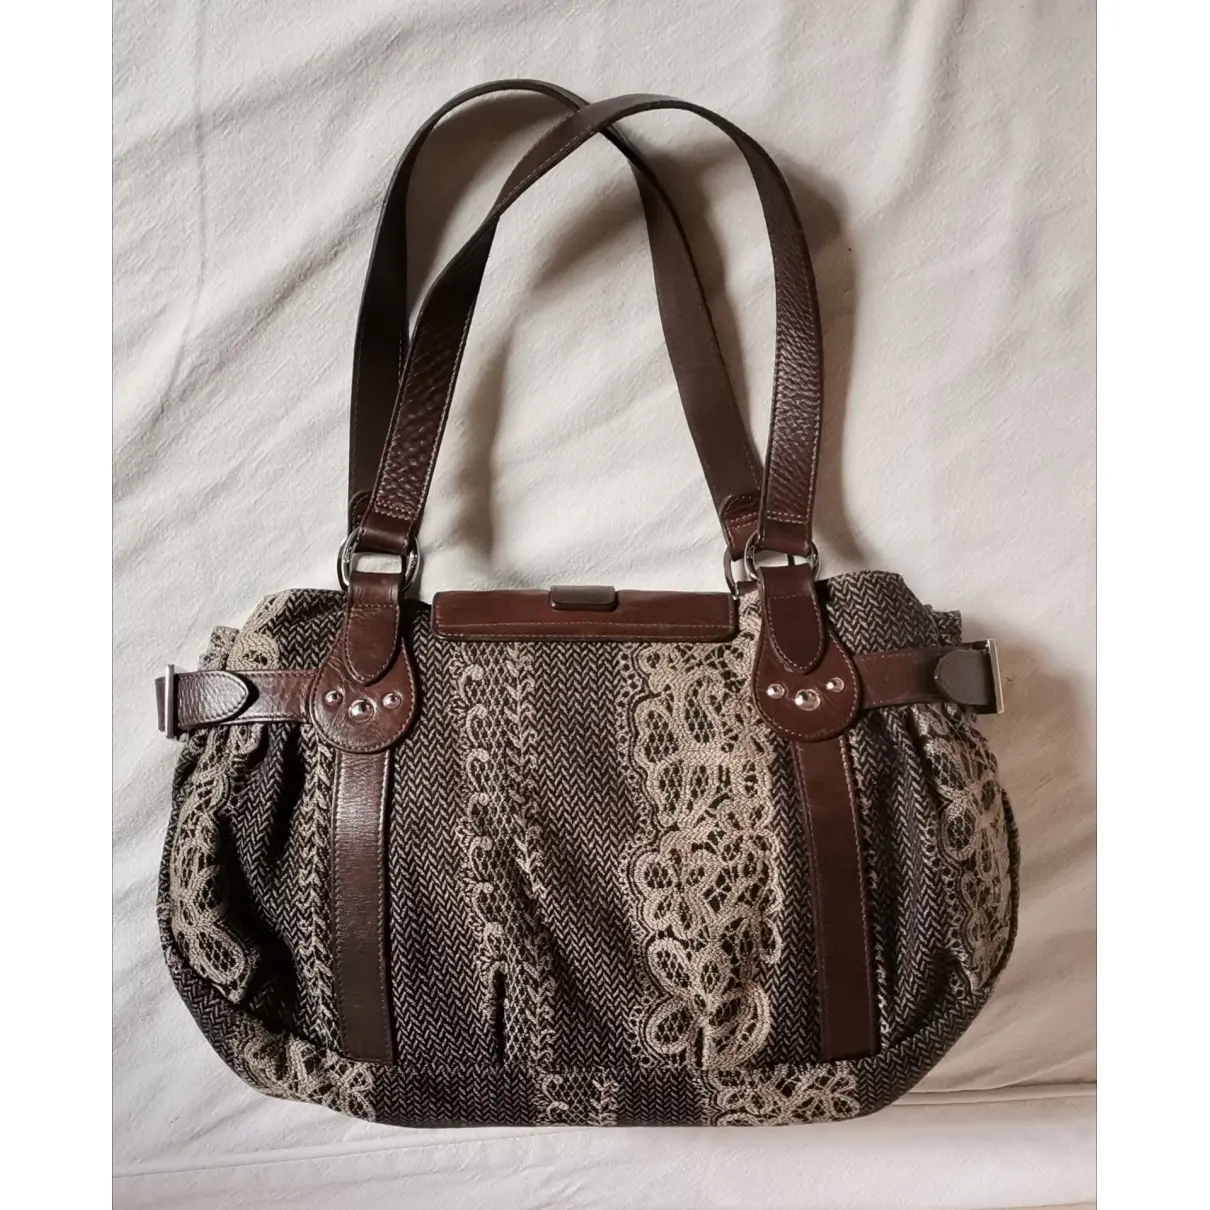 Buy Longchamp Idole cloth handbag online